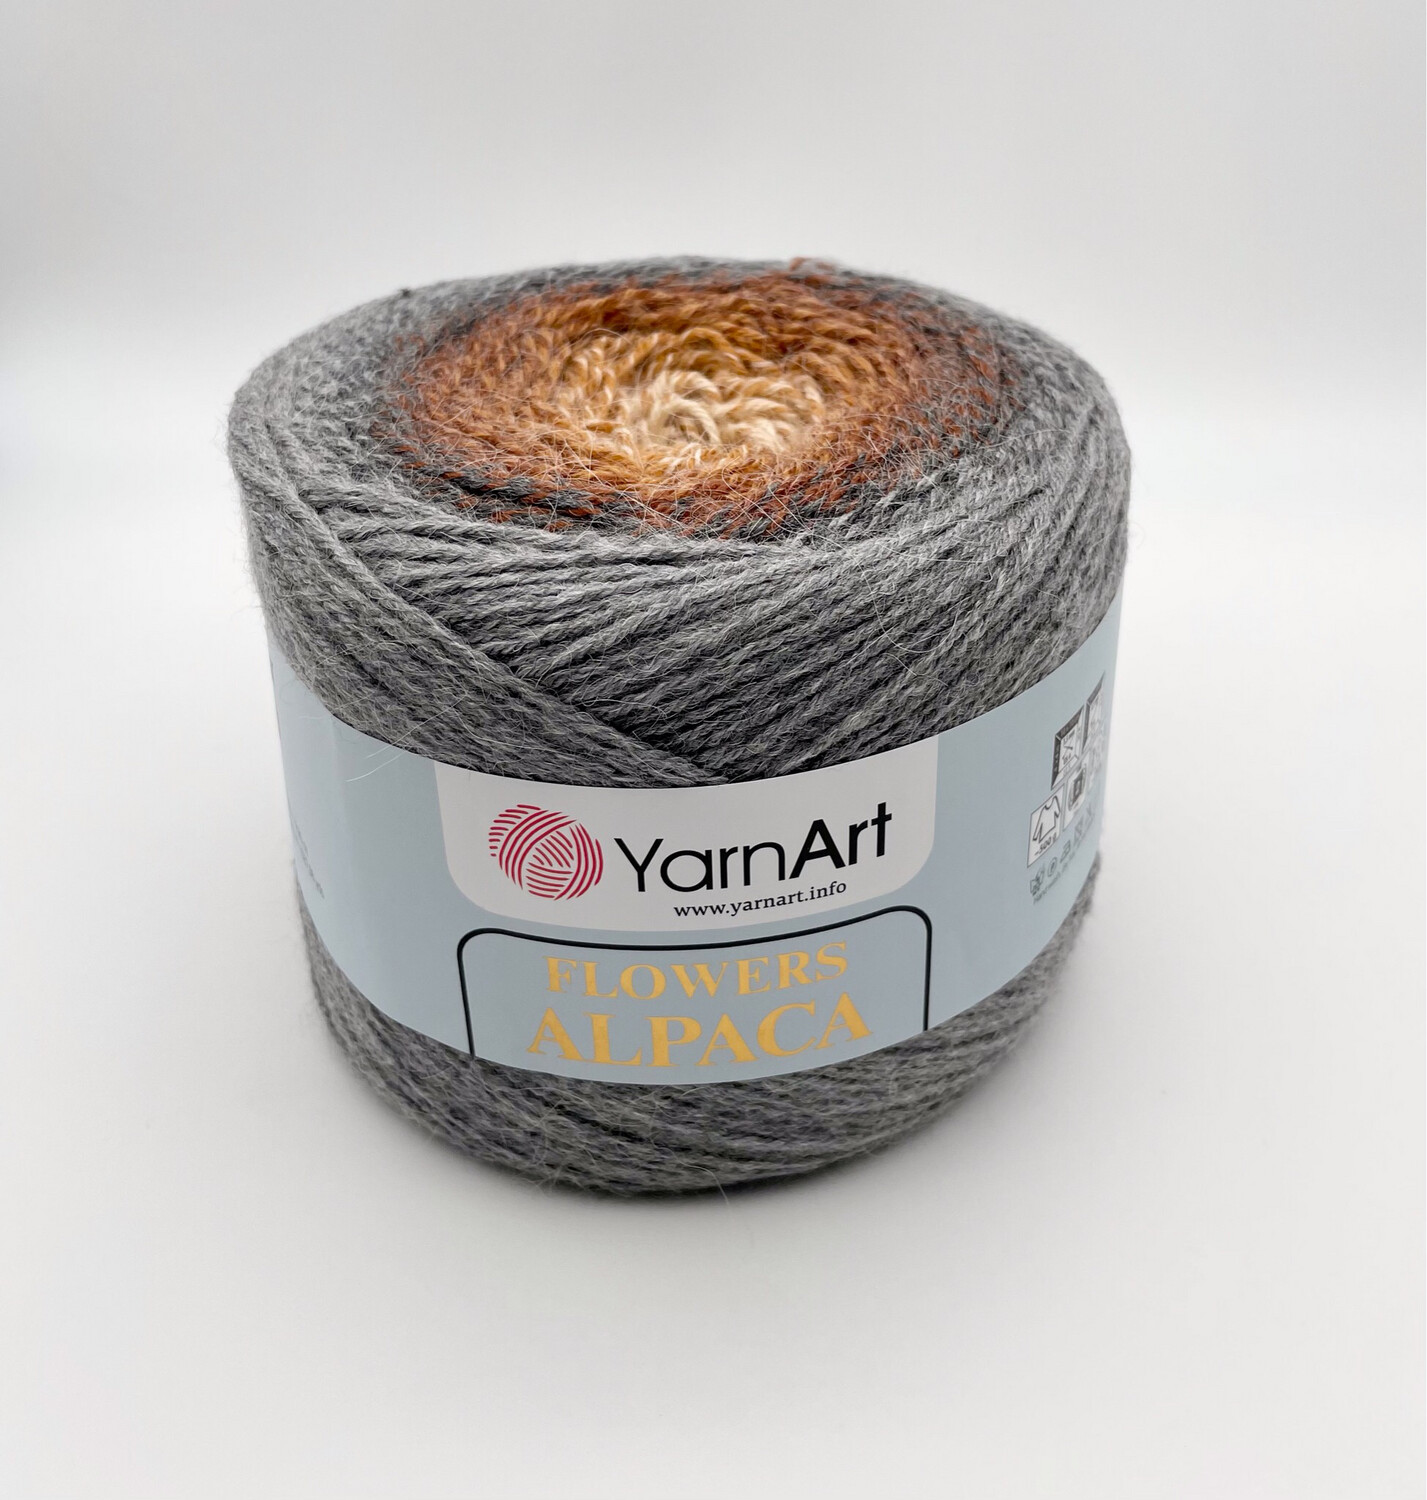 YarnArt Flowers Alpaca - 428